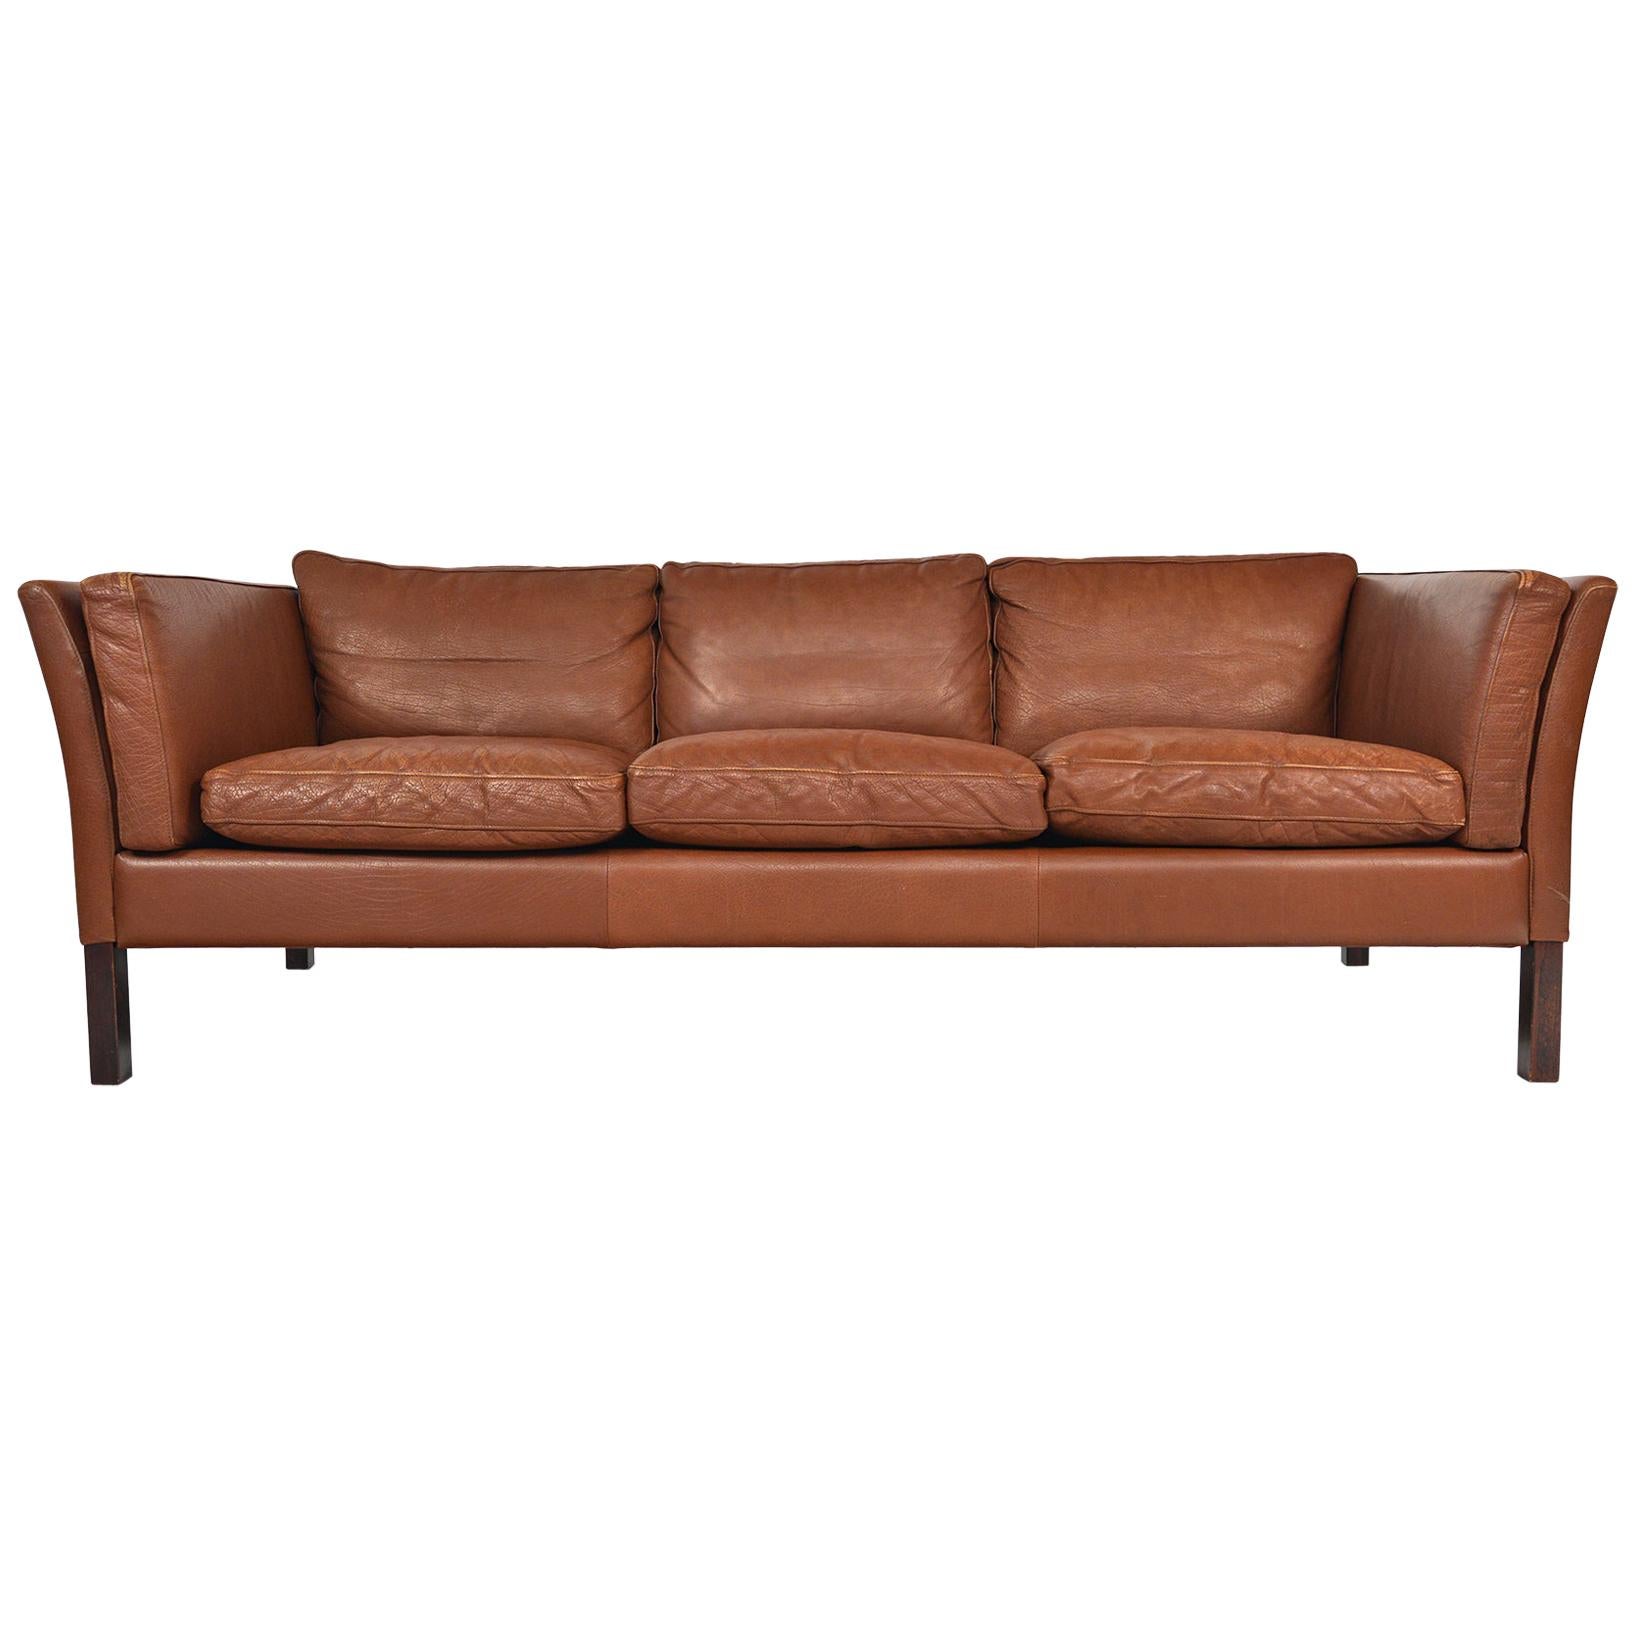 Danish Modern Patinated Rust Toned Leather Three-Seat Leather Sofa